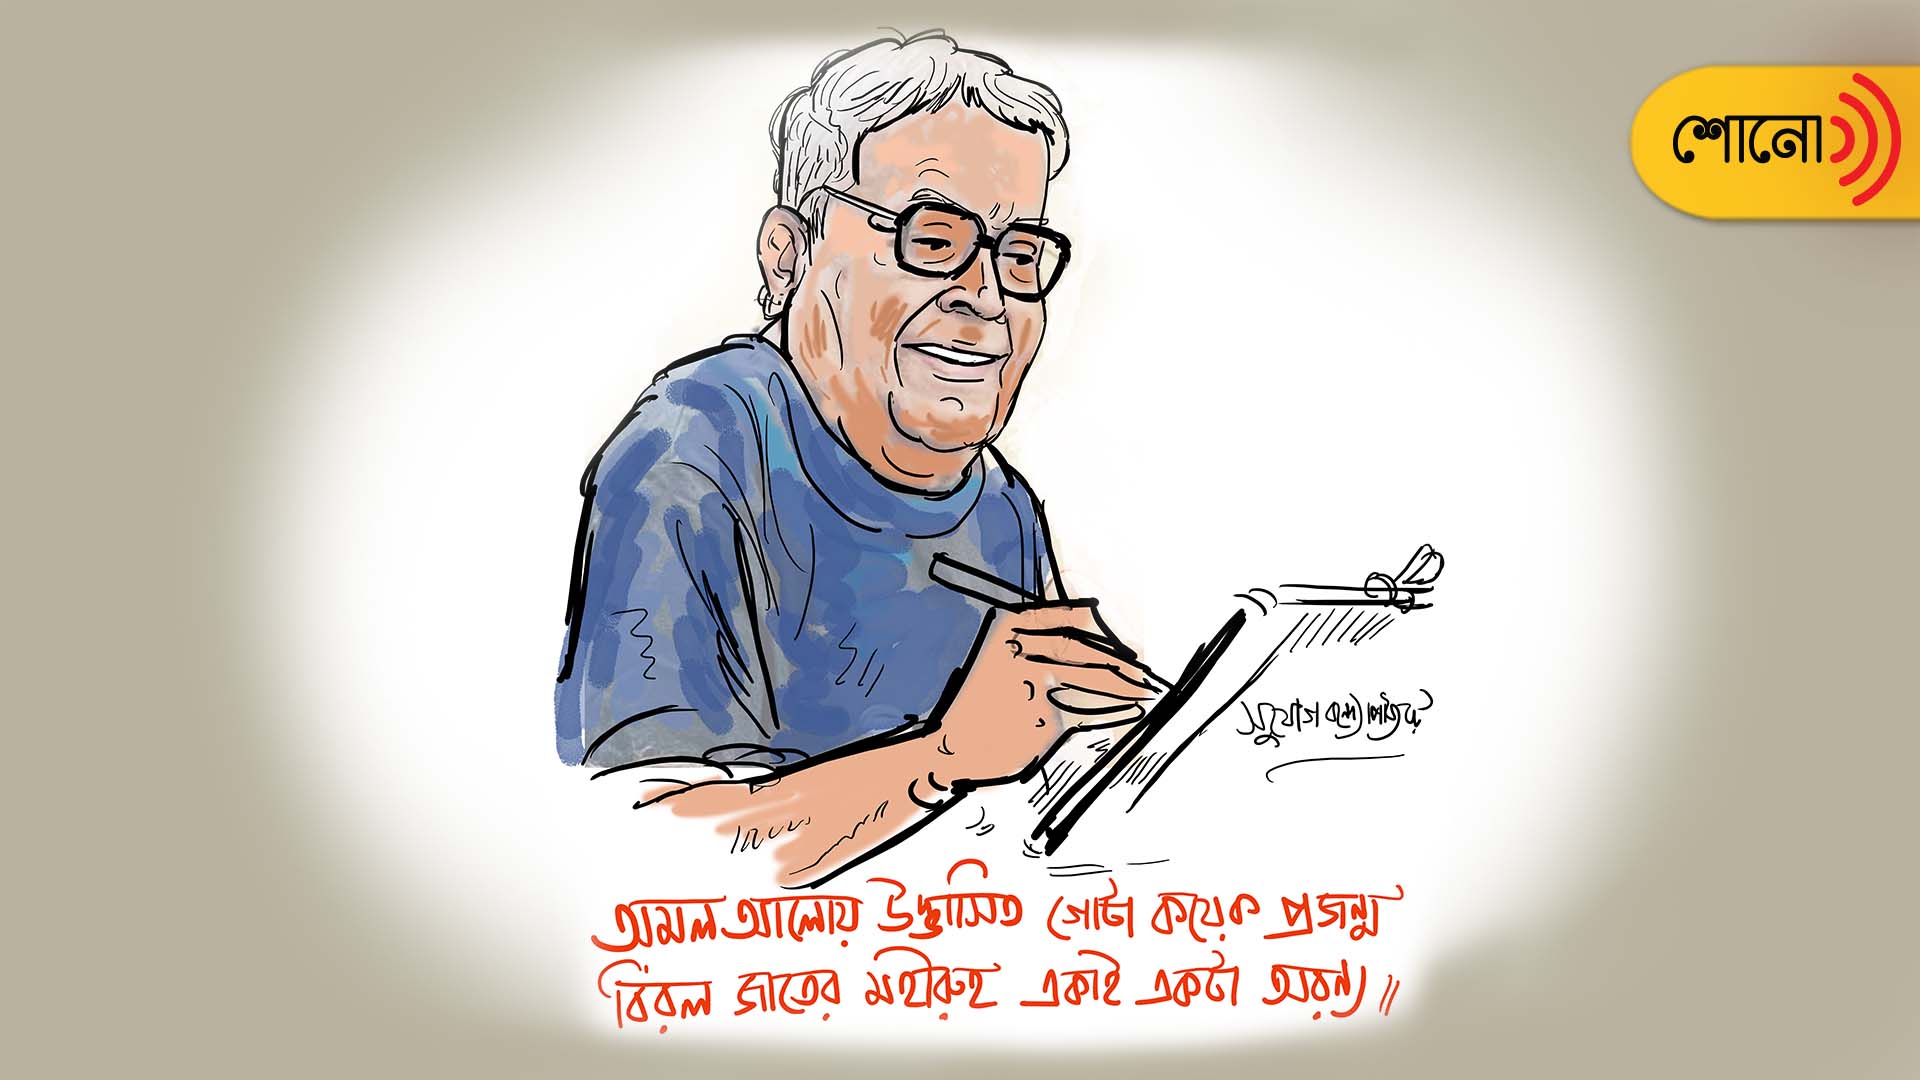 A tribute to famous Bengali cartoonist Amal Chakraborty